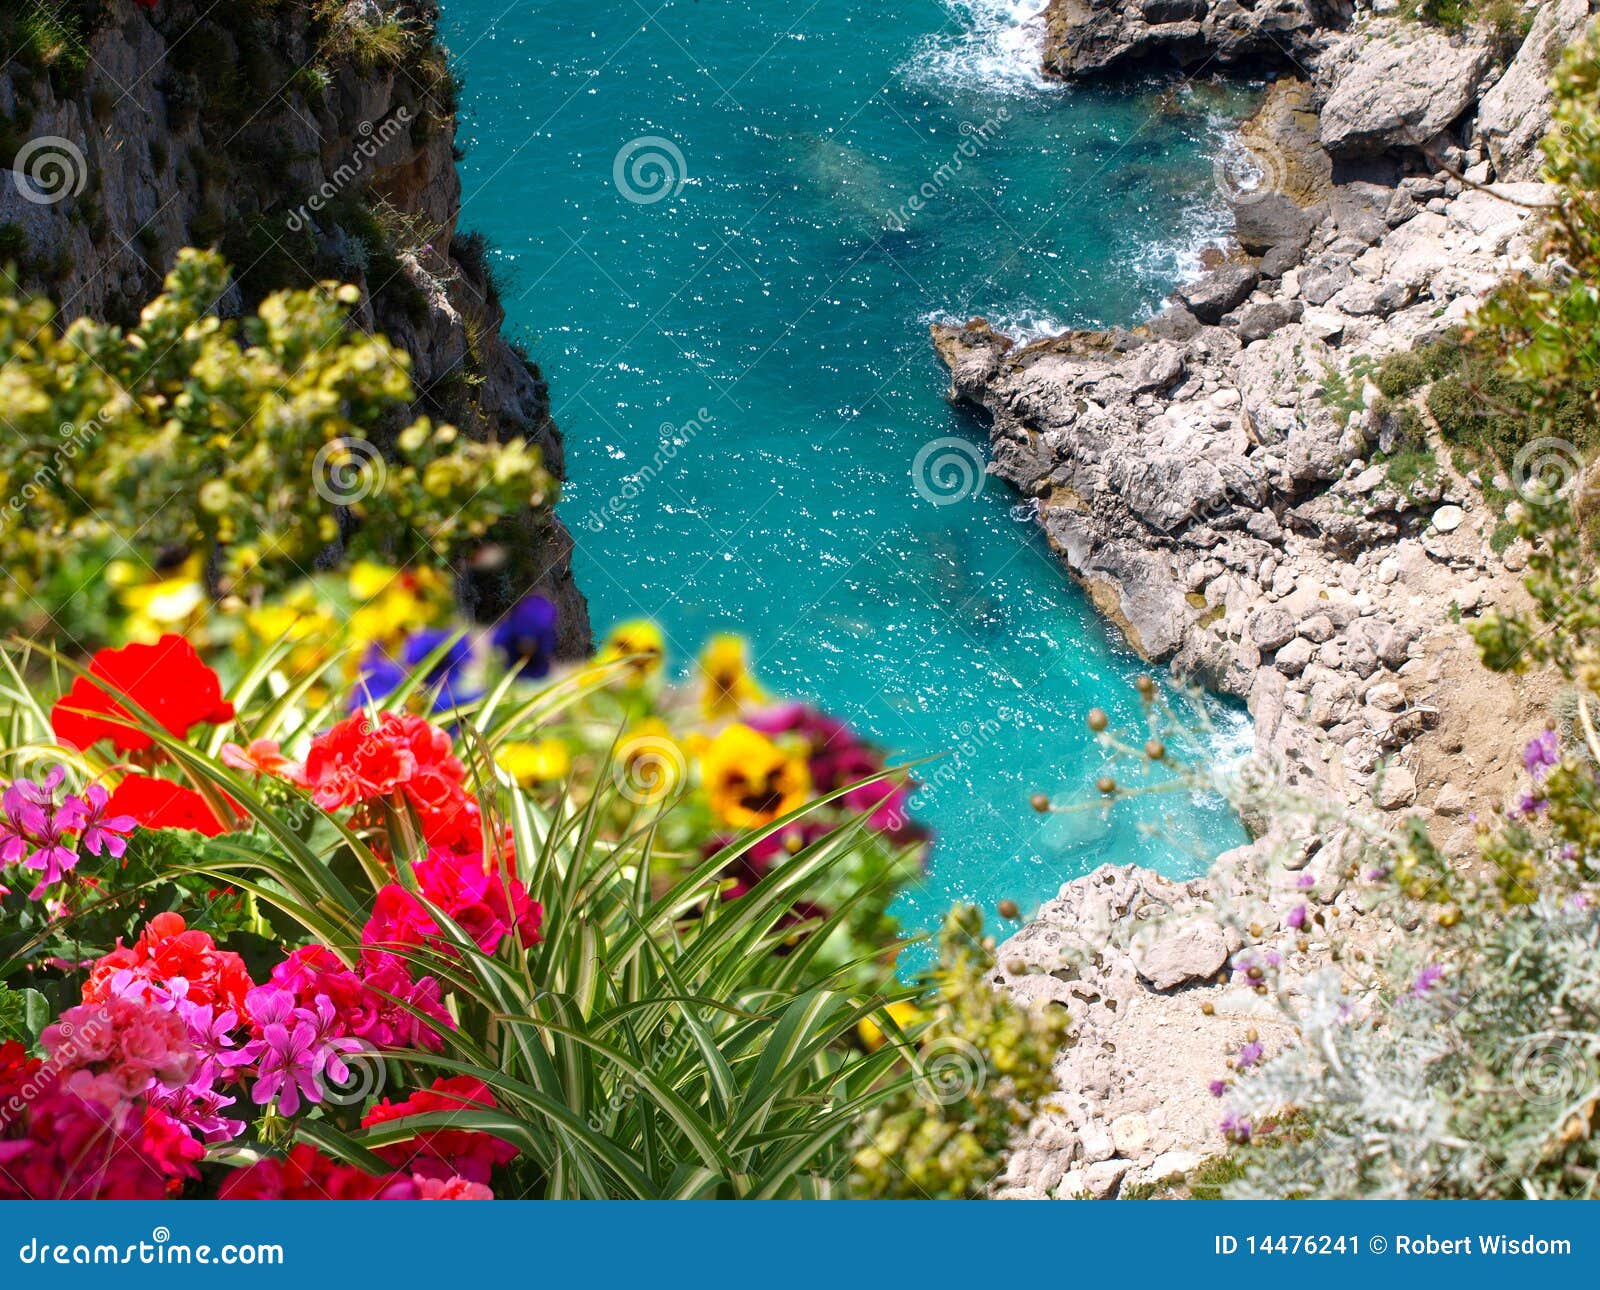 amalfi coast capri italy